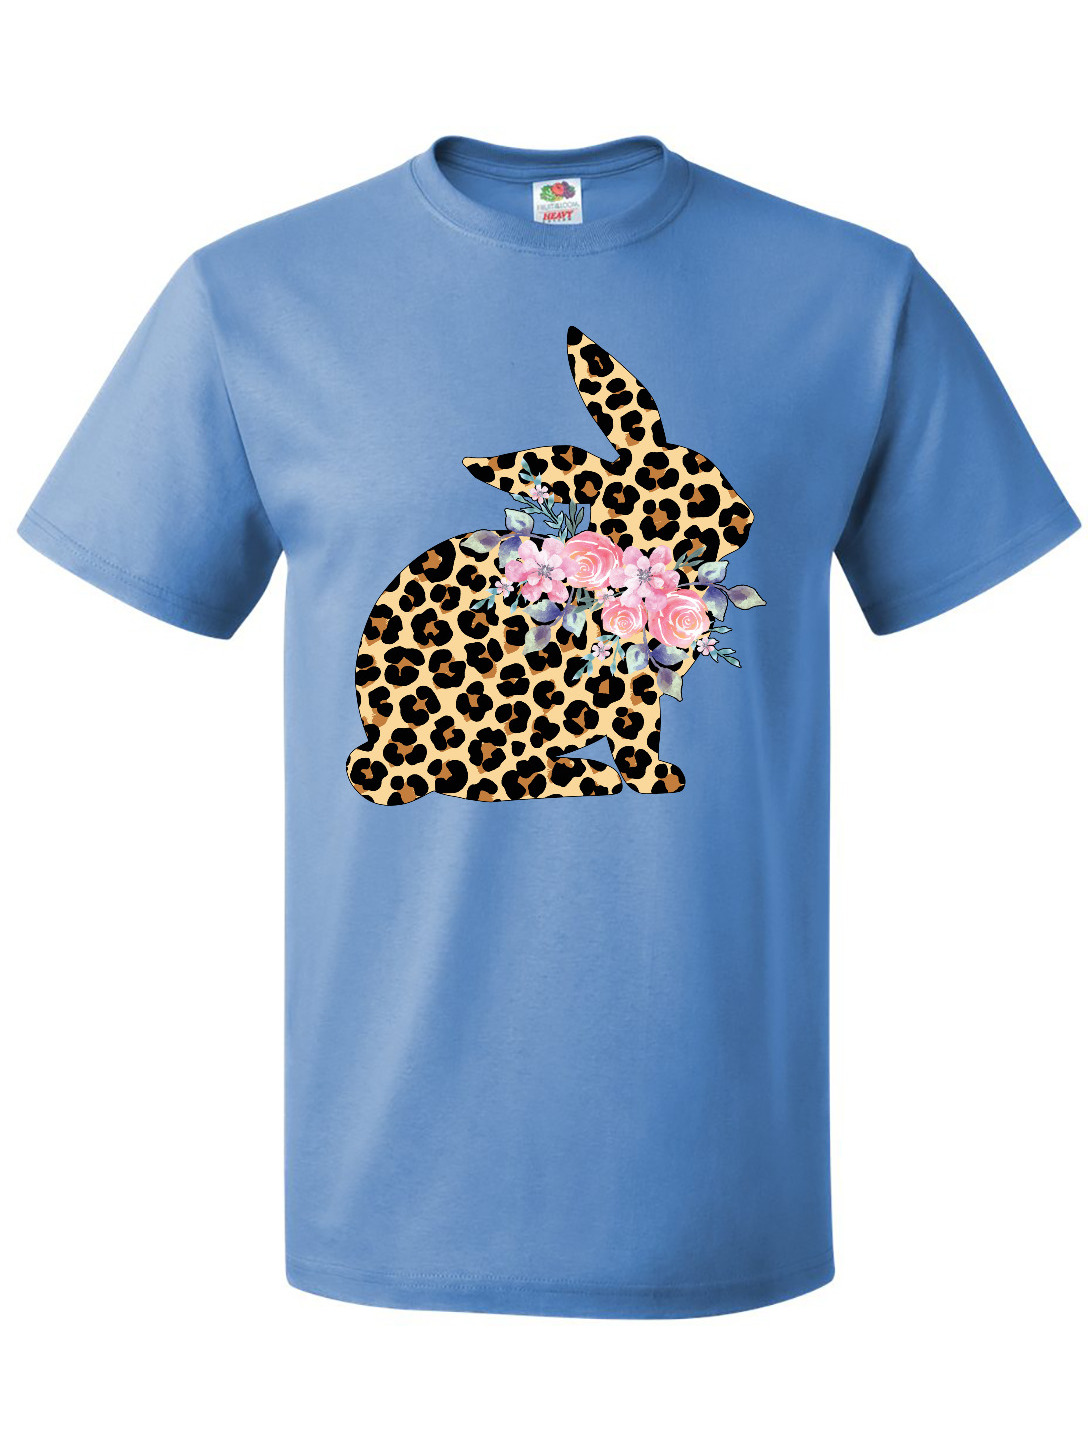 Inktastic Leopard Print Bunny Flowers T-Shirt - image 1 of 4